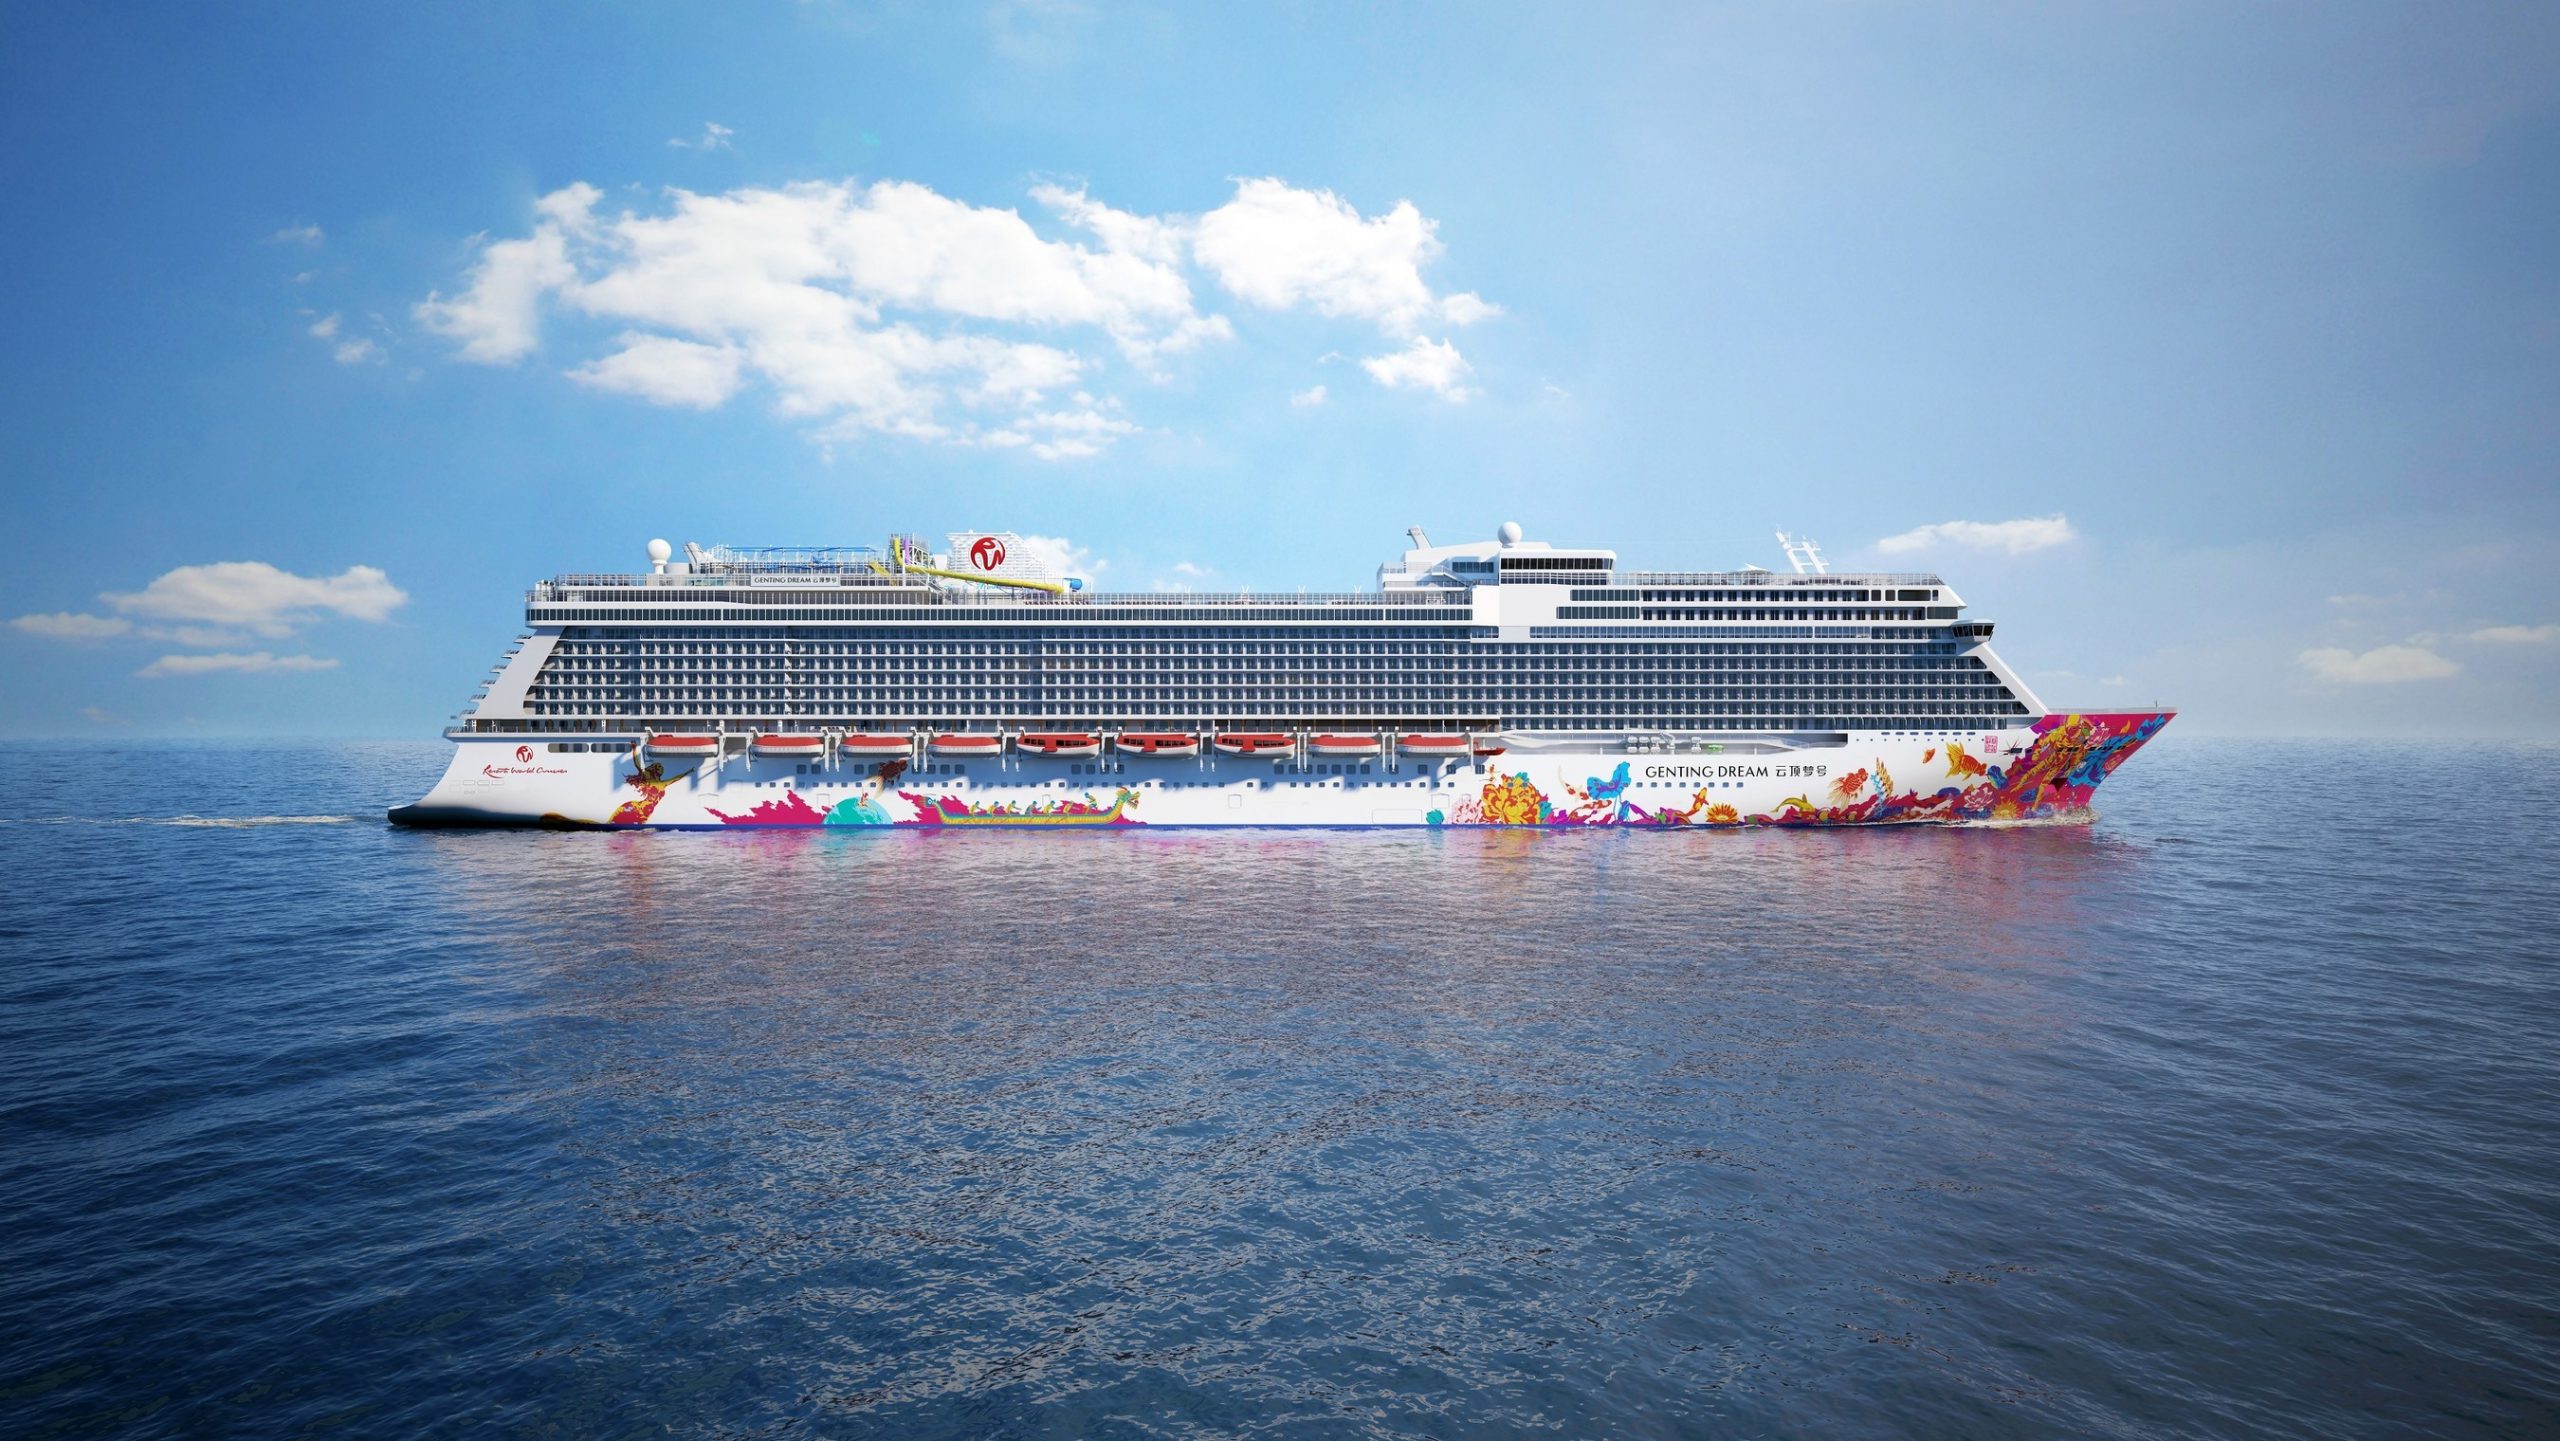 Resort World Cruises will use IBS Software’s iTravel Cruise